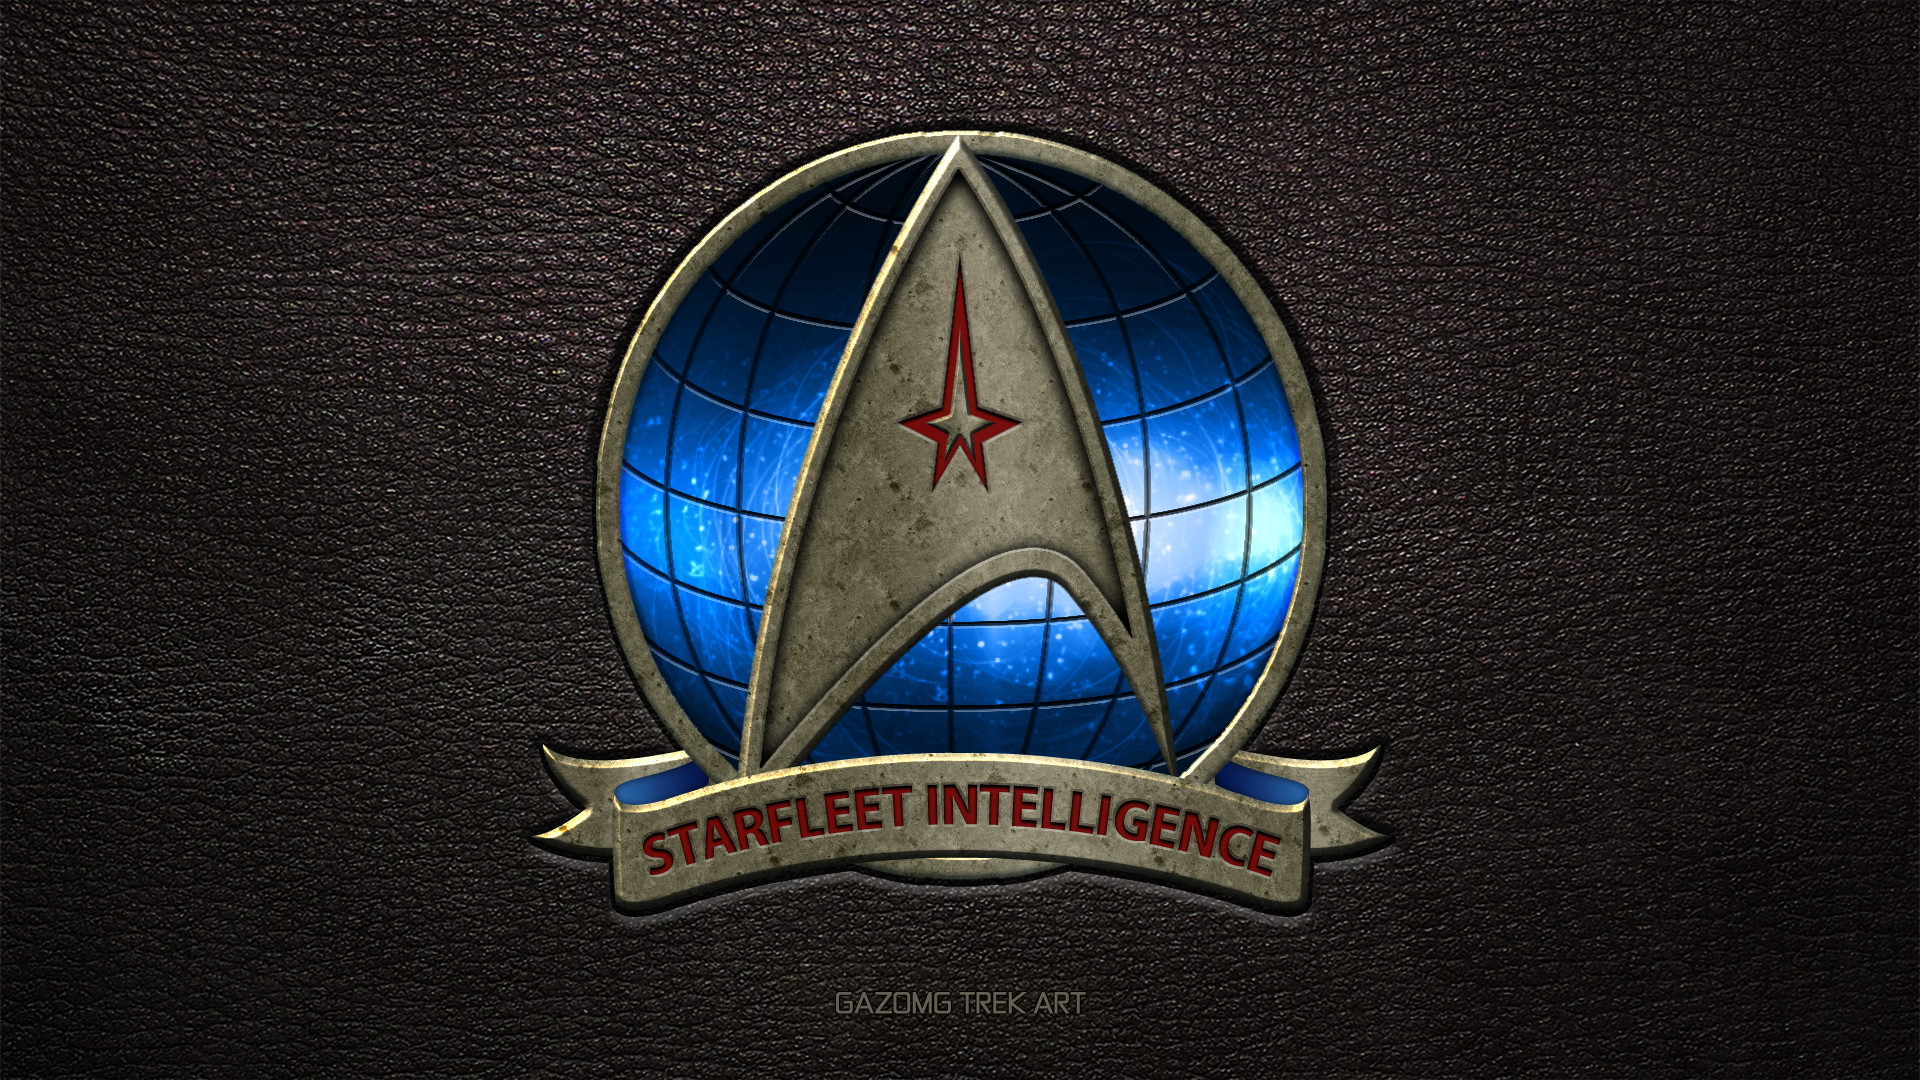 1920x1080 ... Starfleet Intelligence Star Trek 2150's (updated) by gazomg